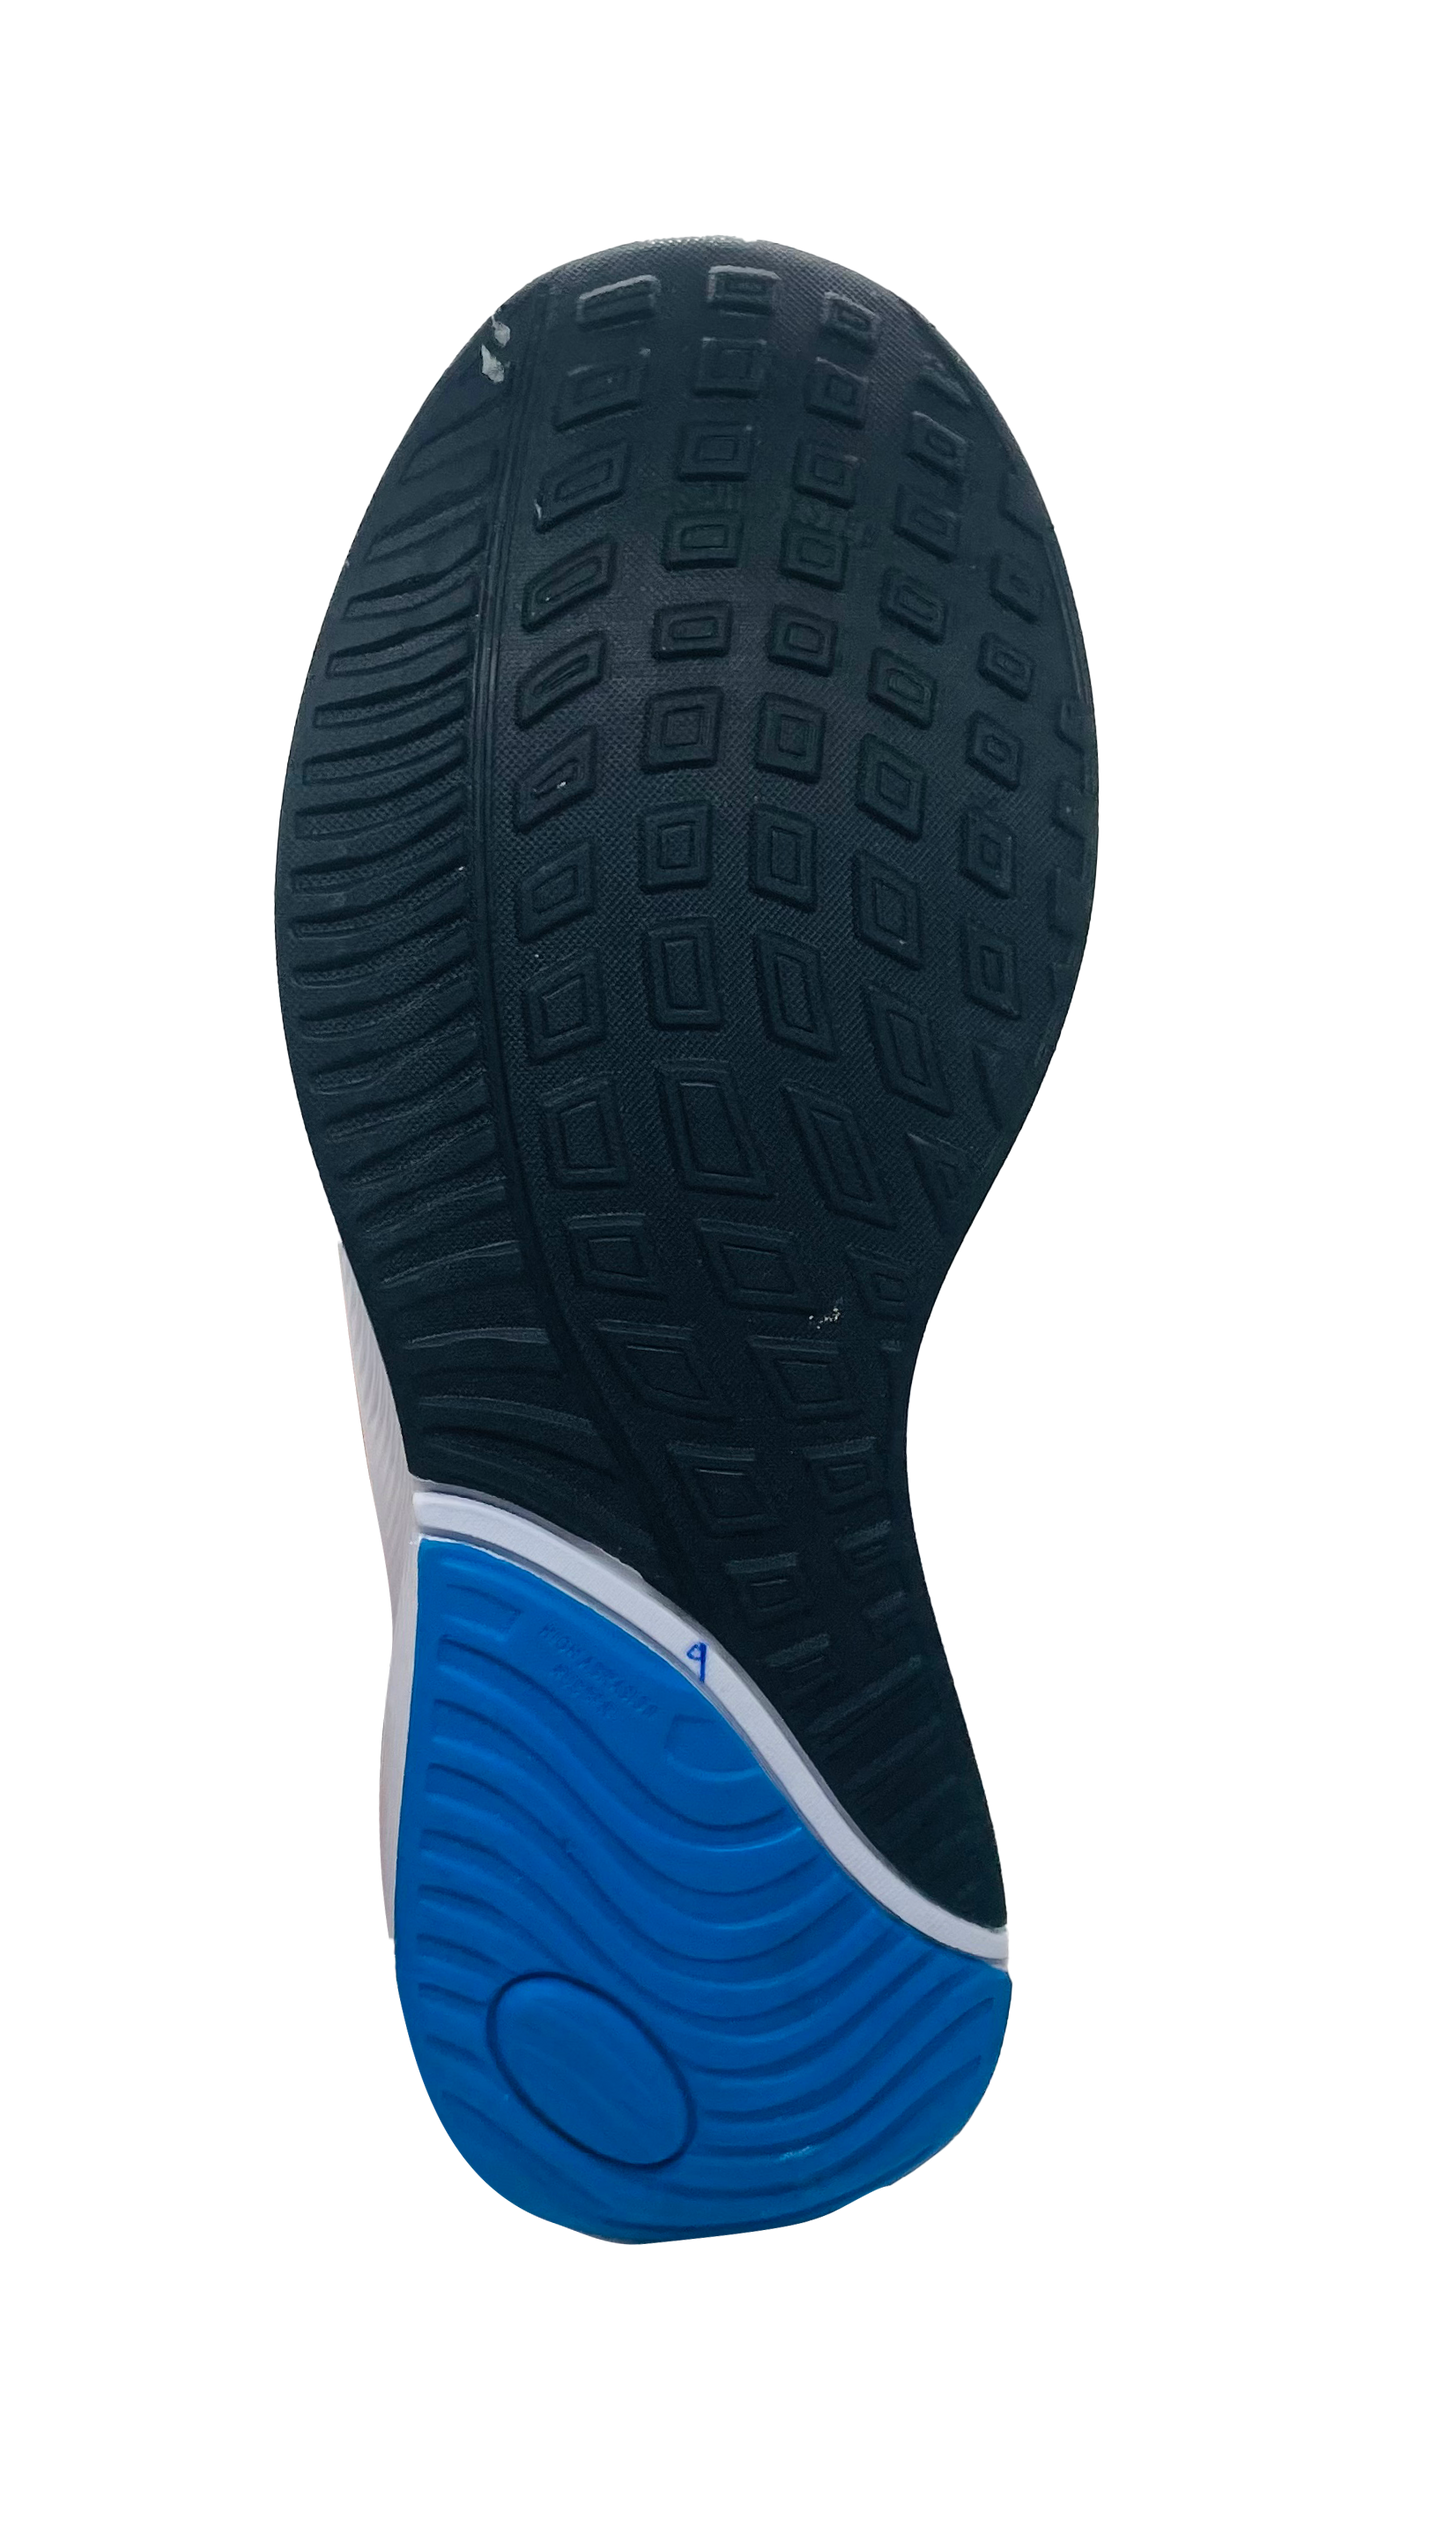 Fenta Sports marathon Runner Shoes (White- Blue)